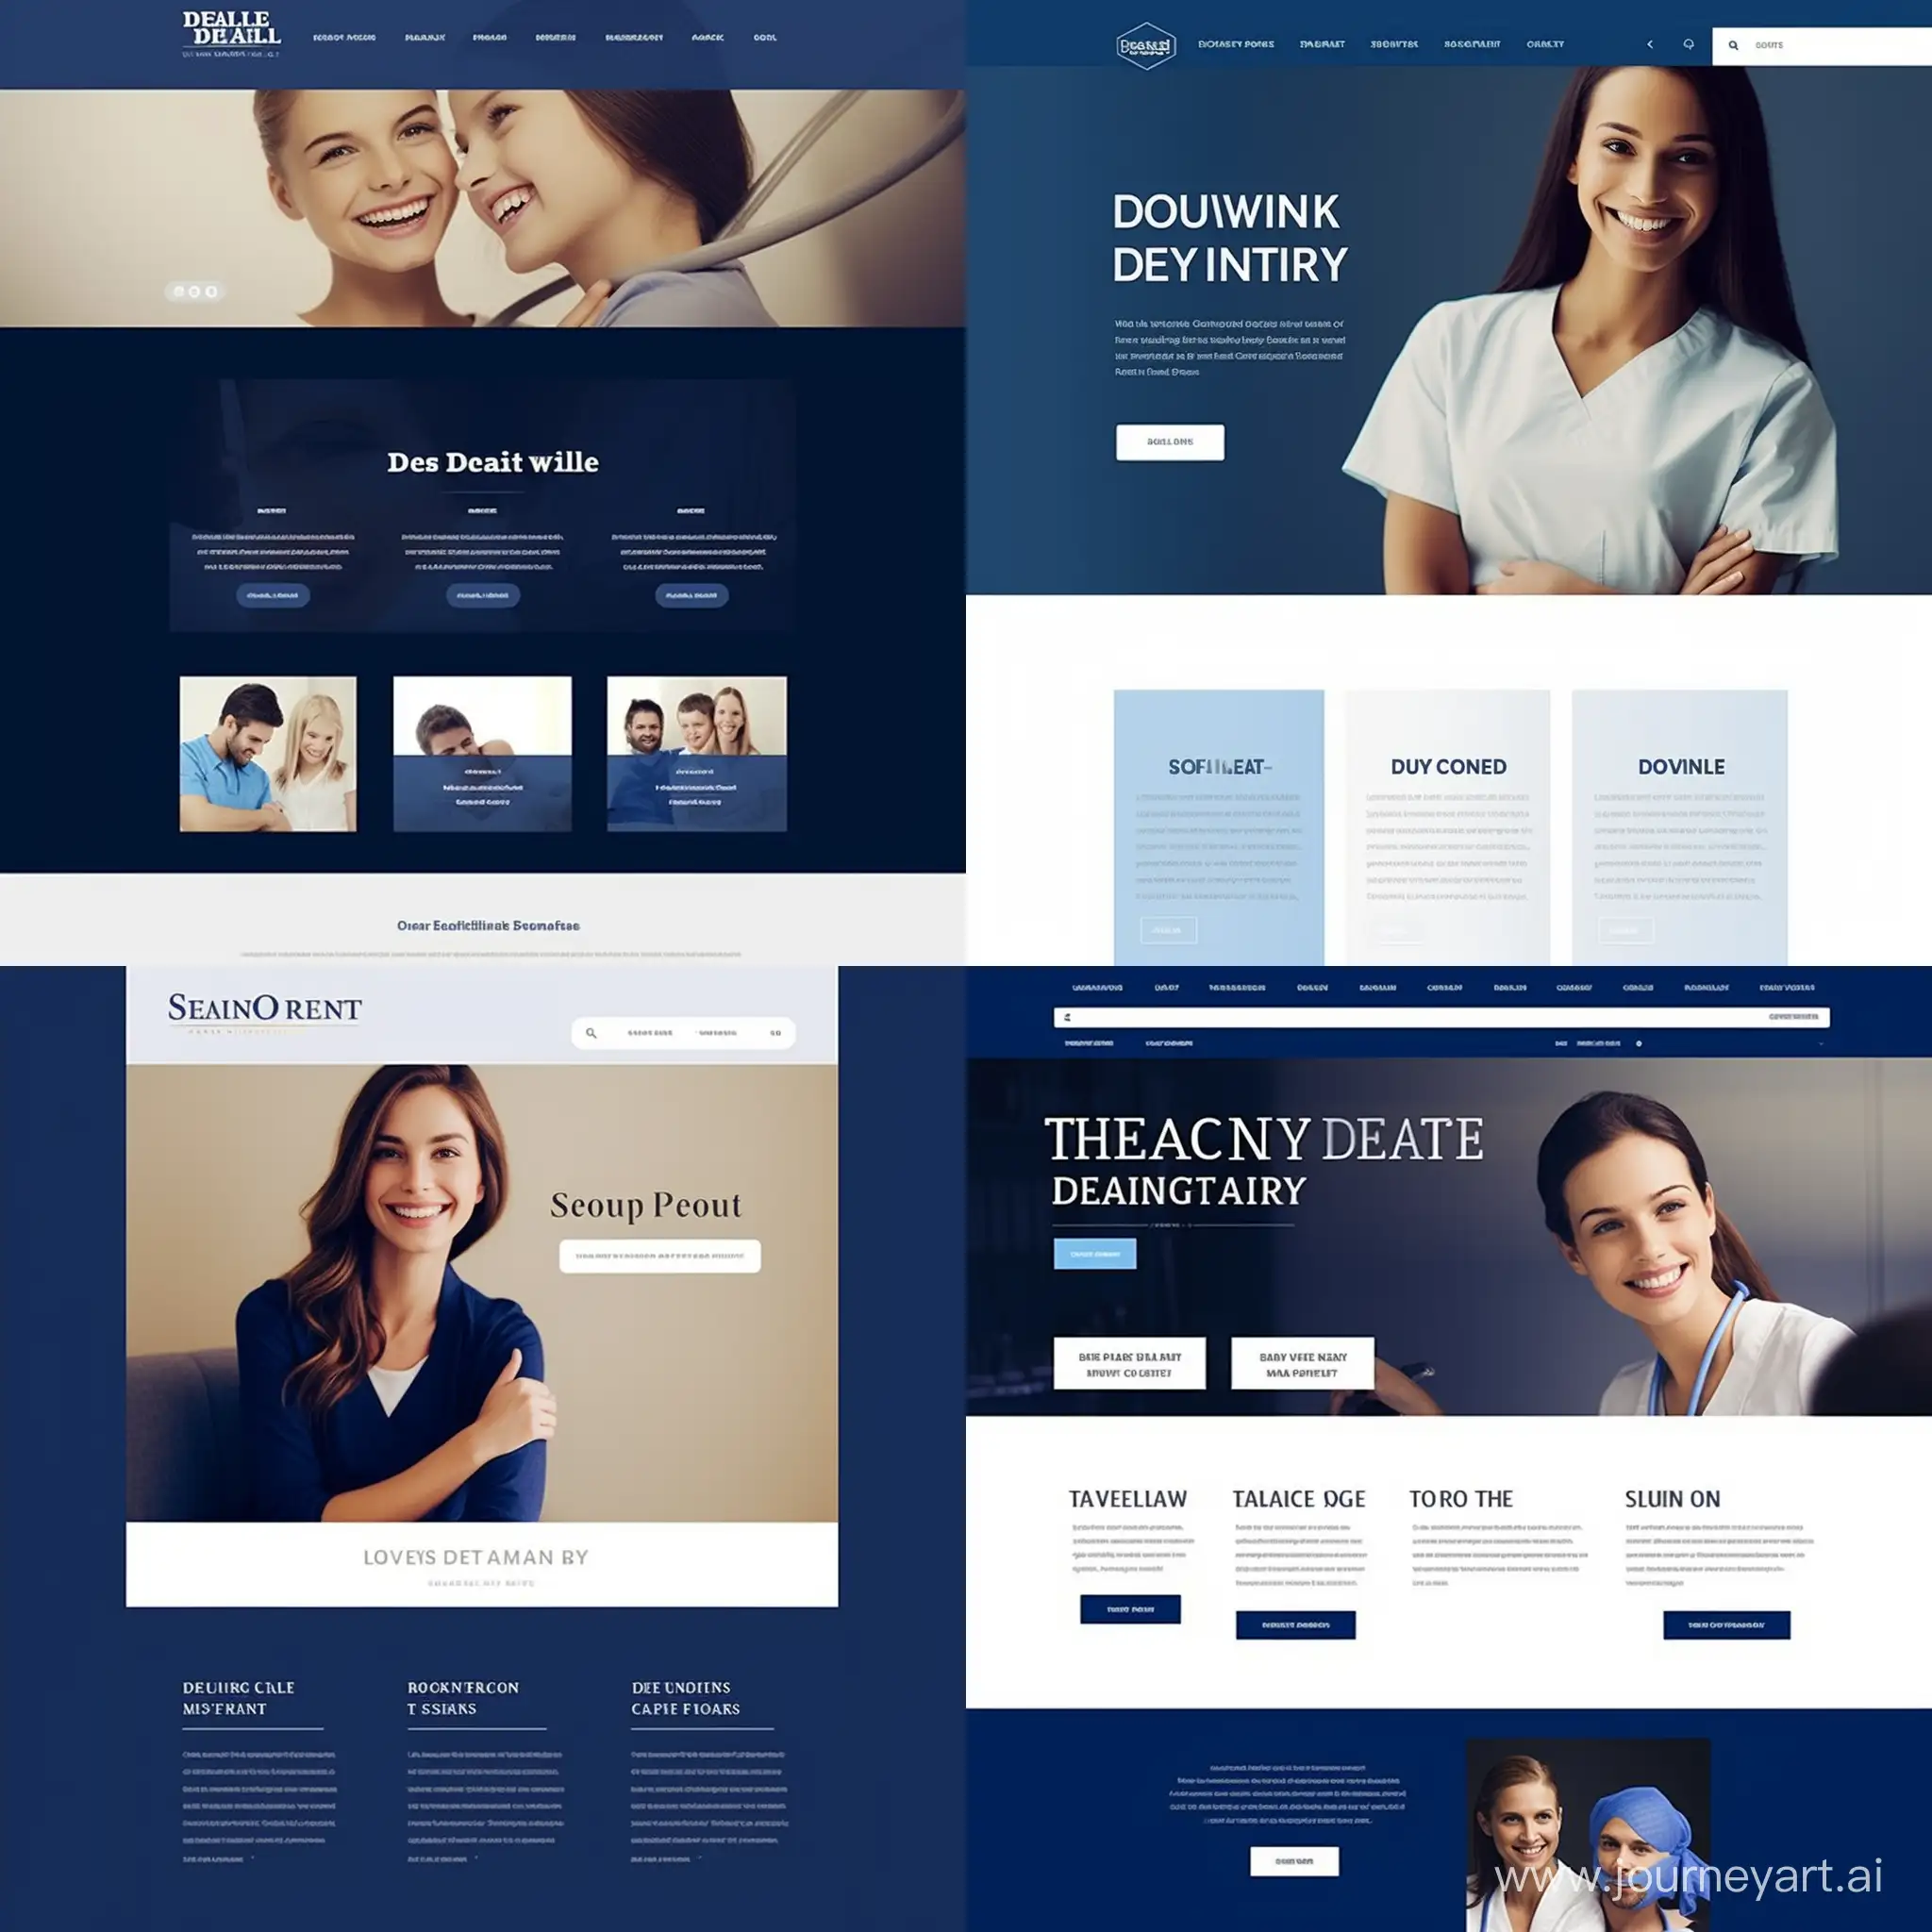 Modern-Dental-Clinic-Web-Design-in-Dark-Blue-and-White-Palette